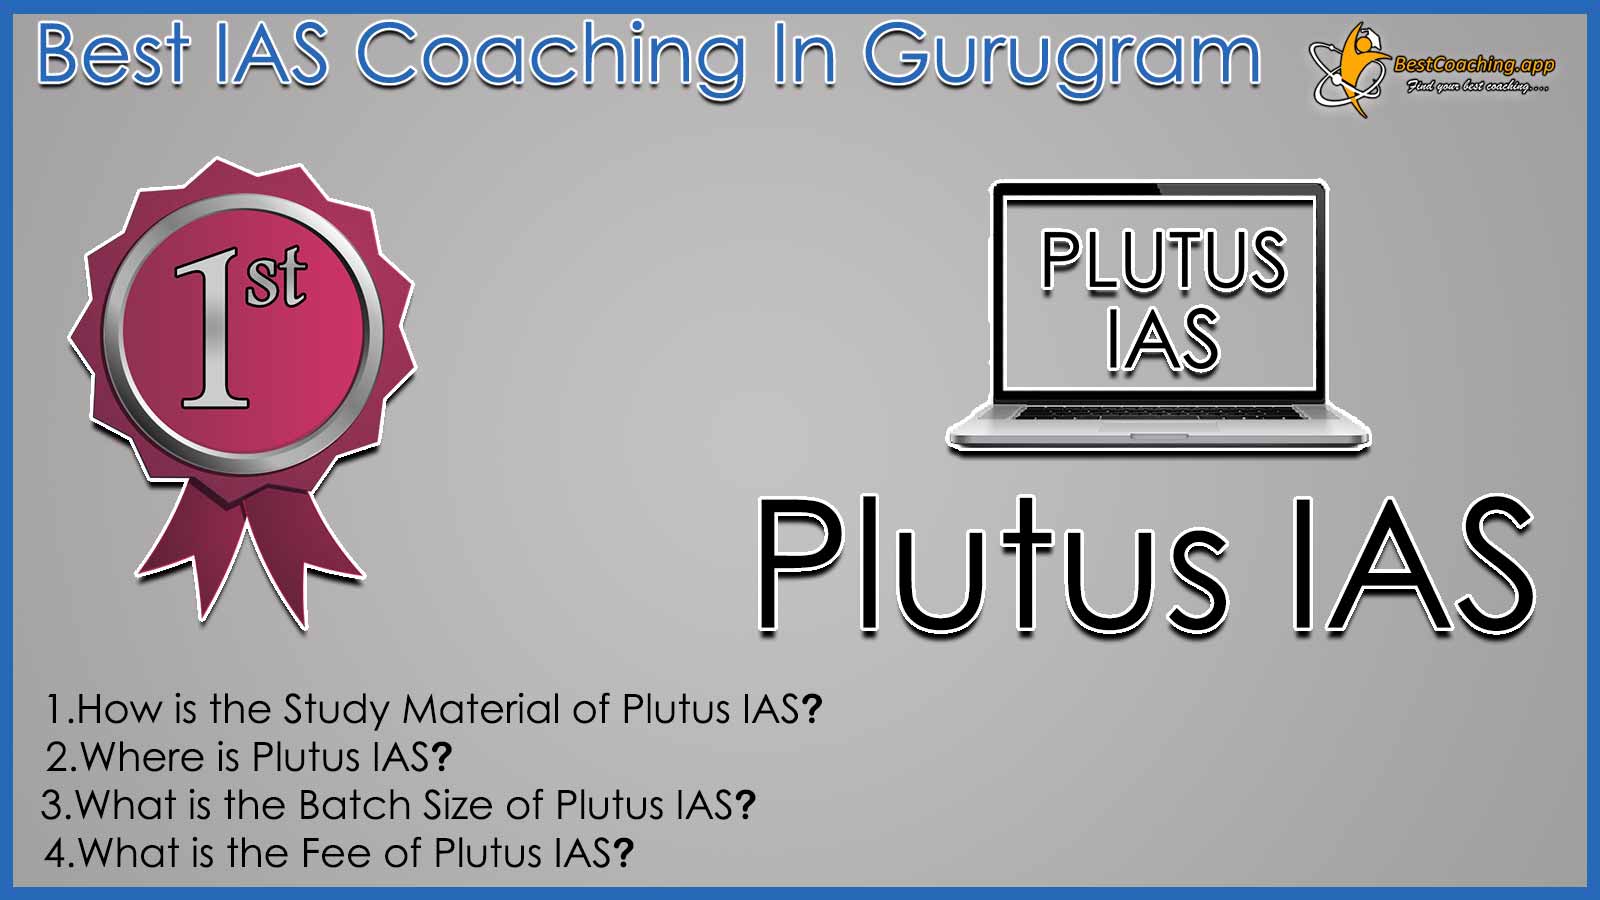 Best IAS Coaching in Gurugram